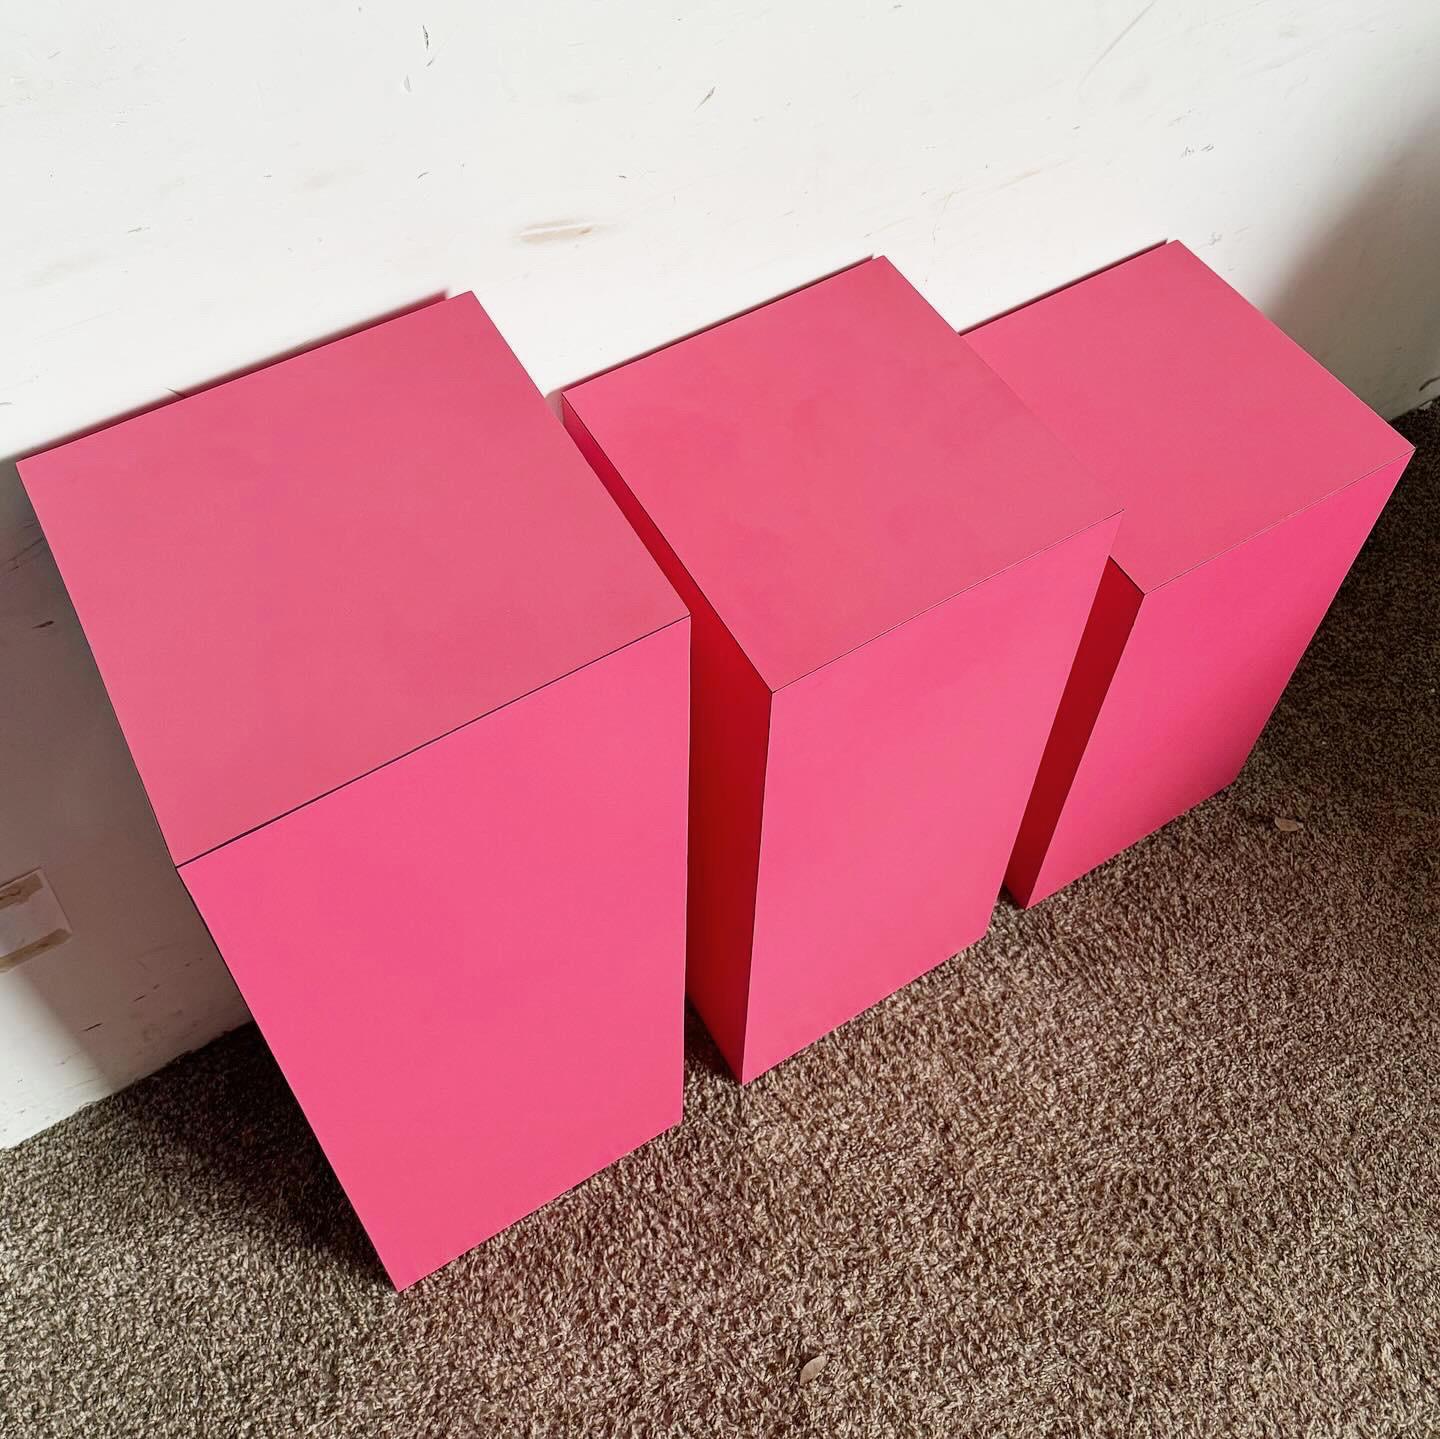 American Postmodern Hot Pink Matte Laminate Ascending Rectangular Pedestal Set - Set of 3 For Sale